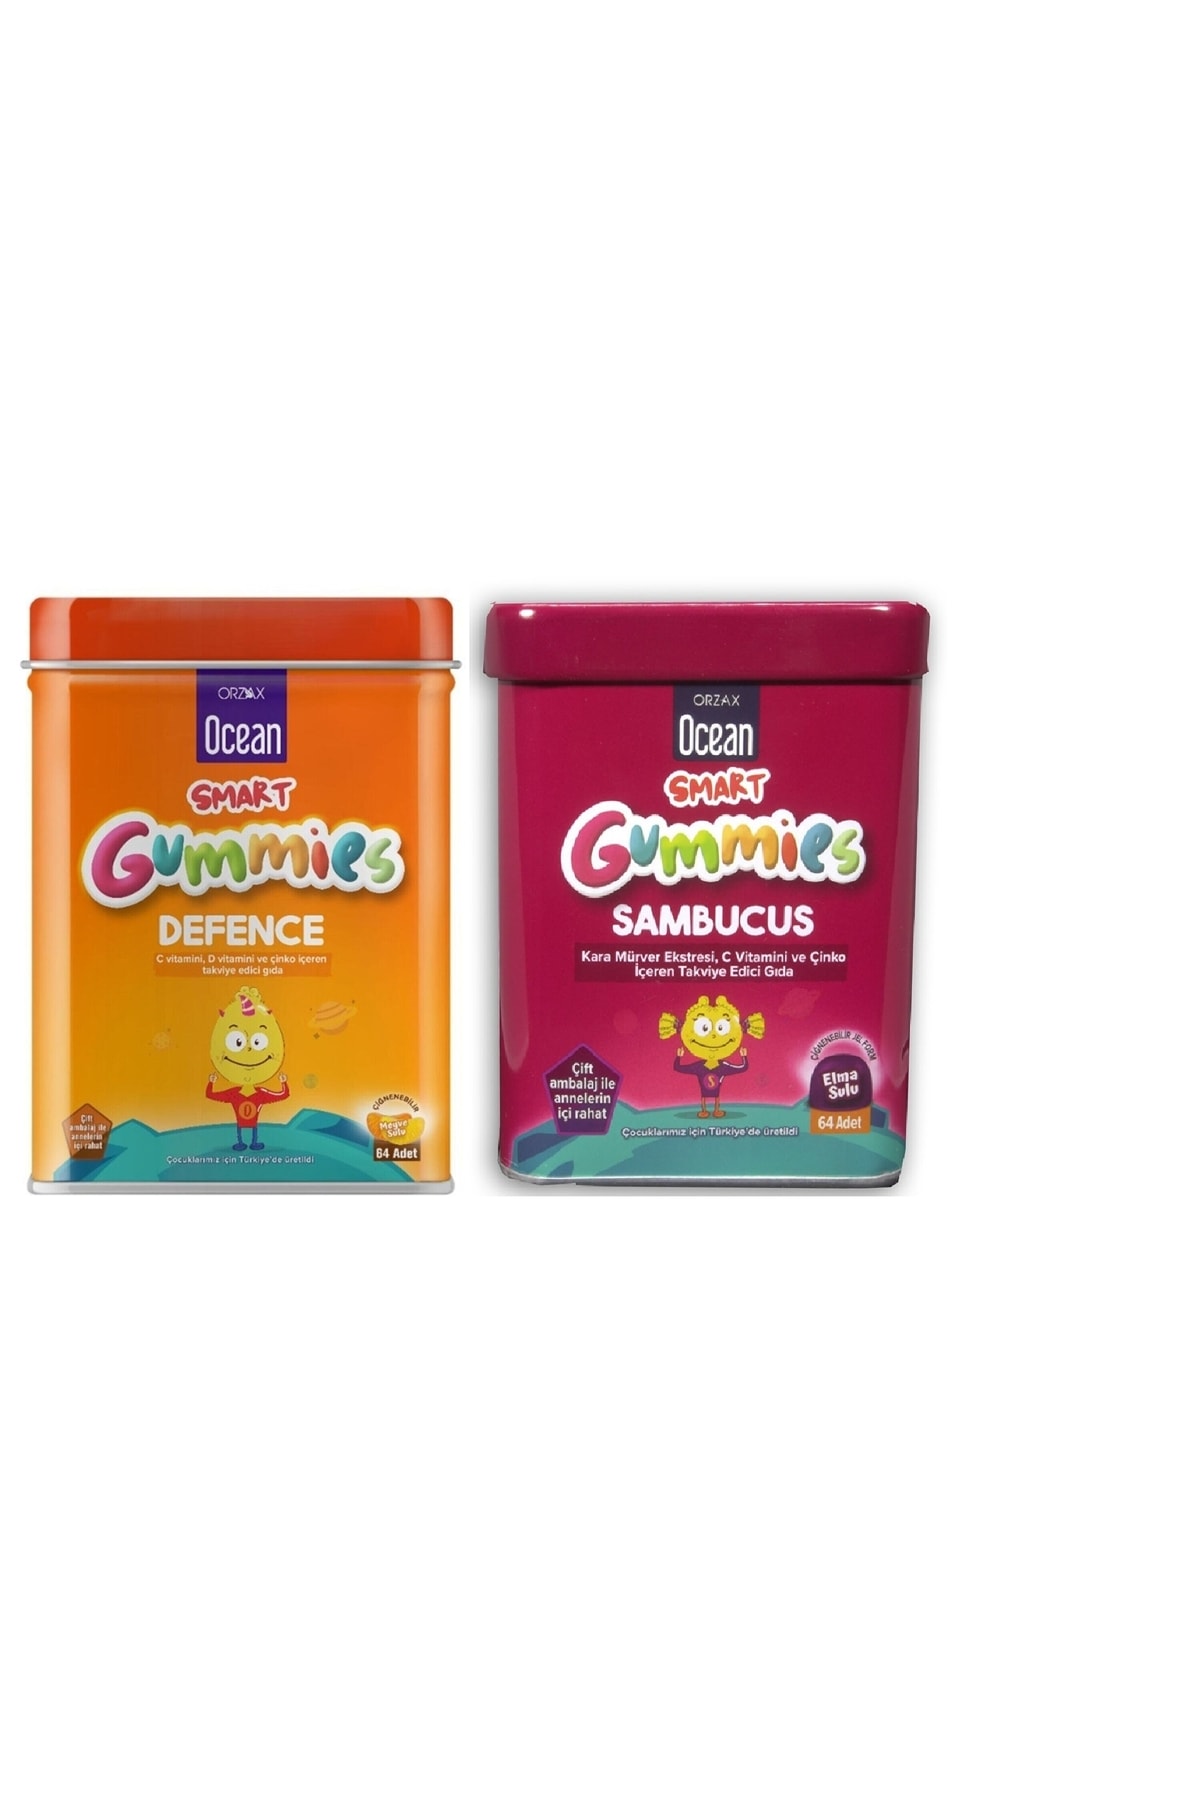 Ocean Smart Gummies Defence Smart Gummies Sambucus 2li Avantaj Paket